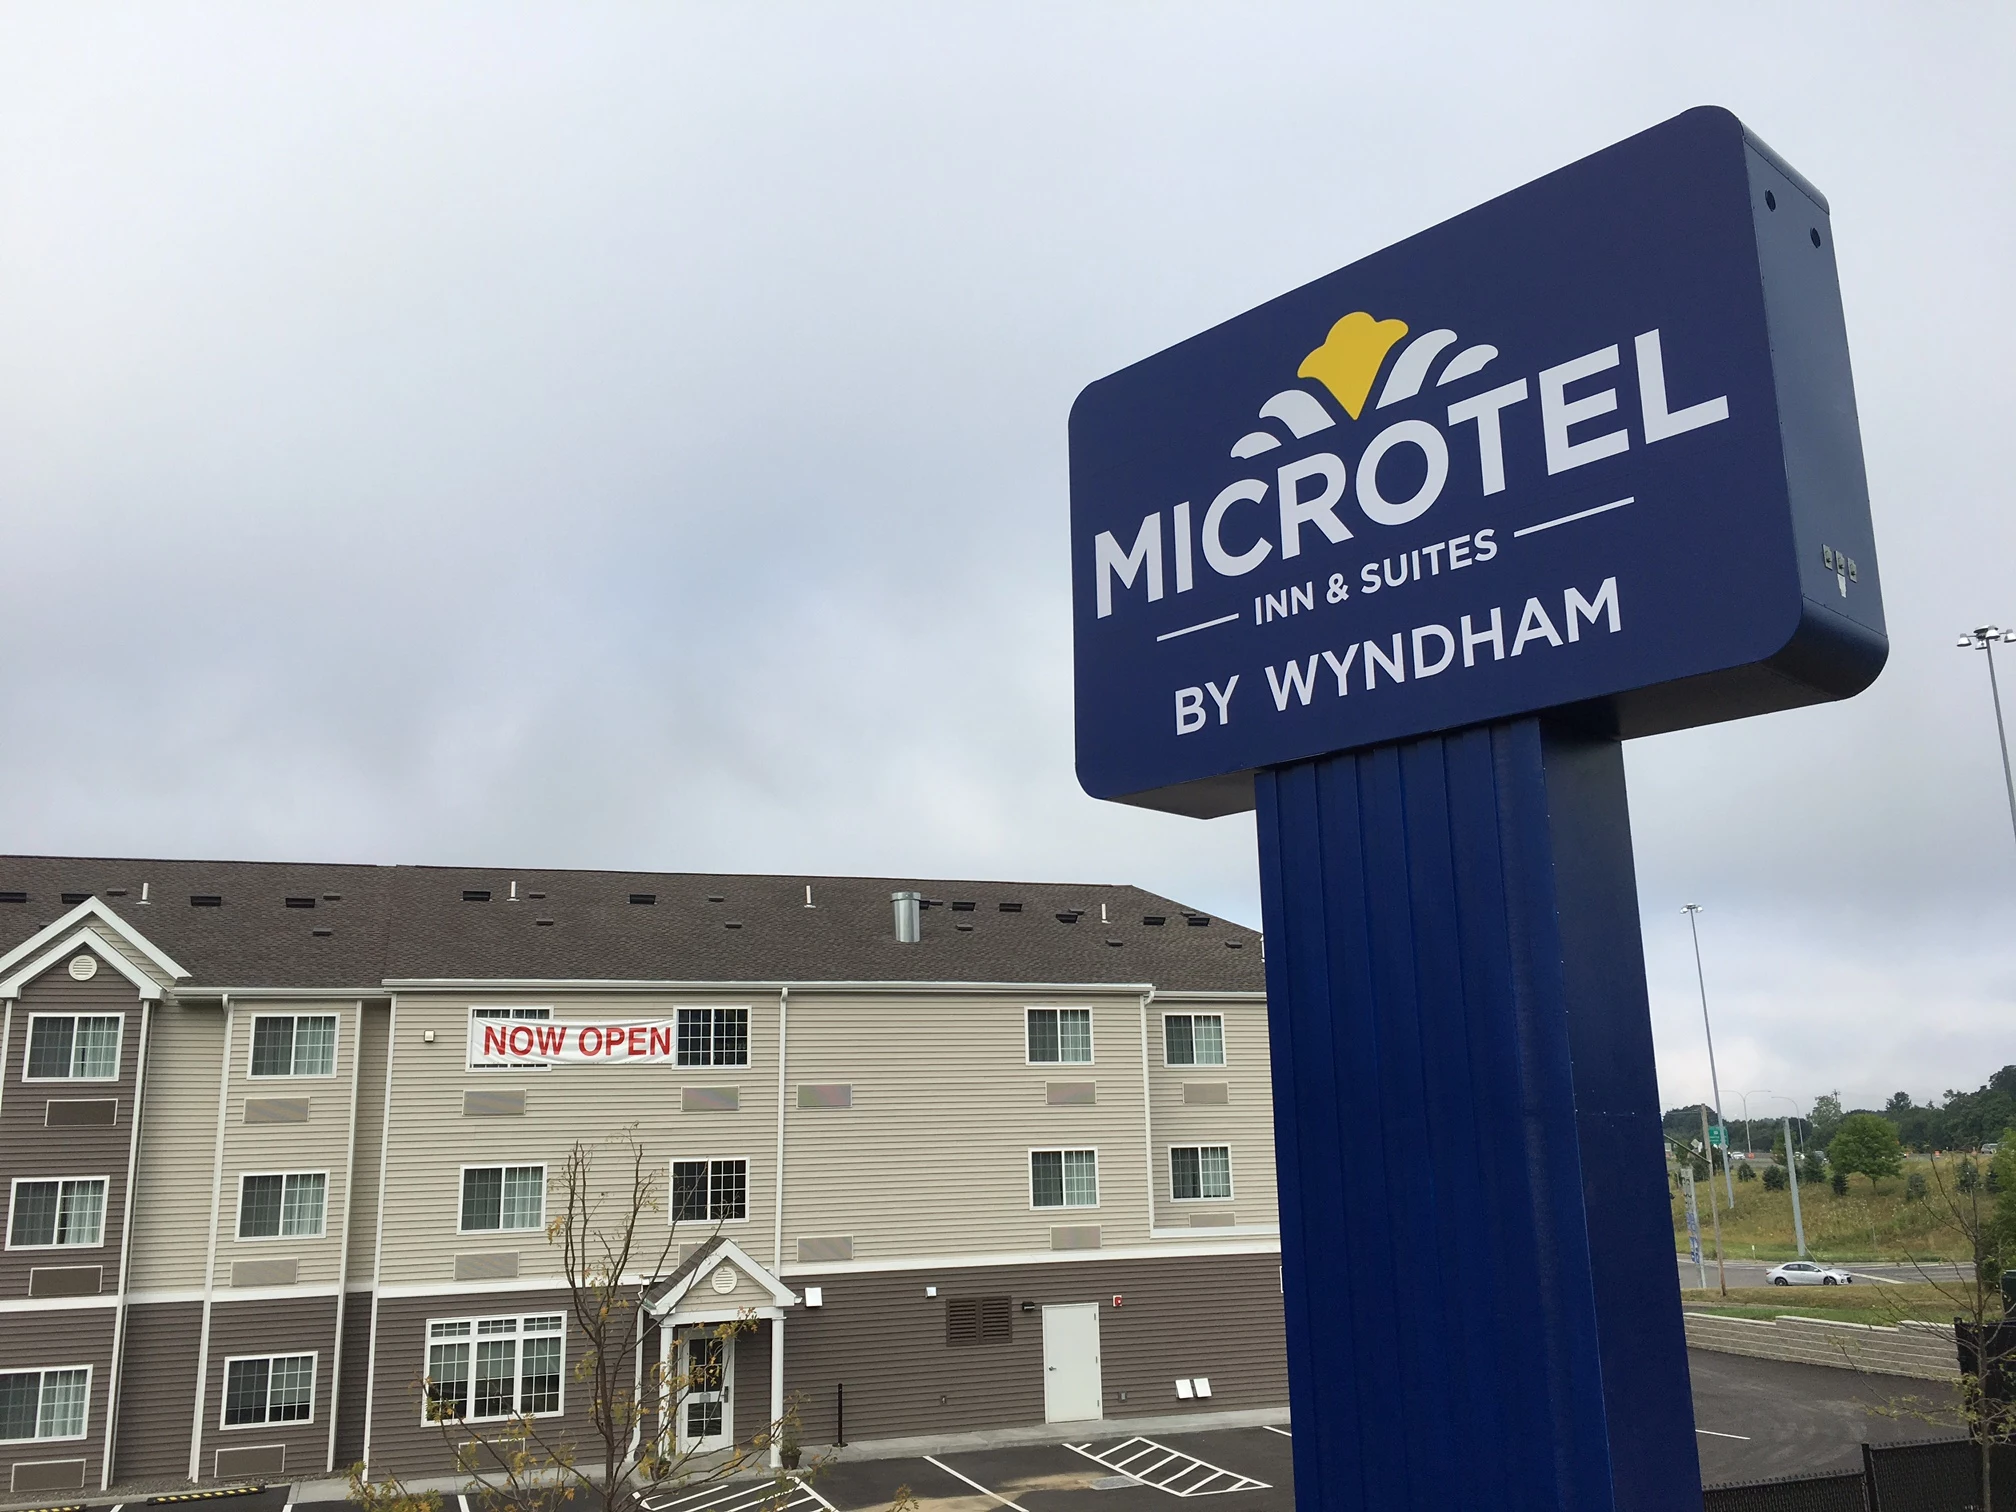 microtel inn & suites by wyndham salt lake city airport salt lake city, ut